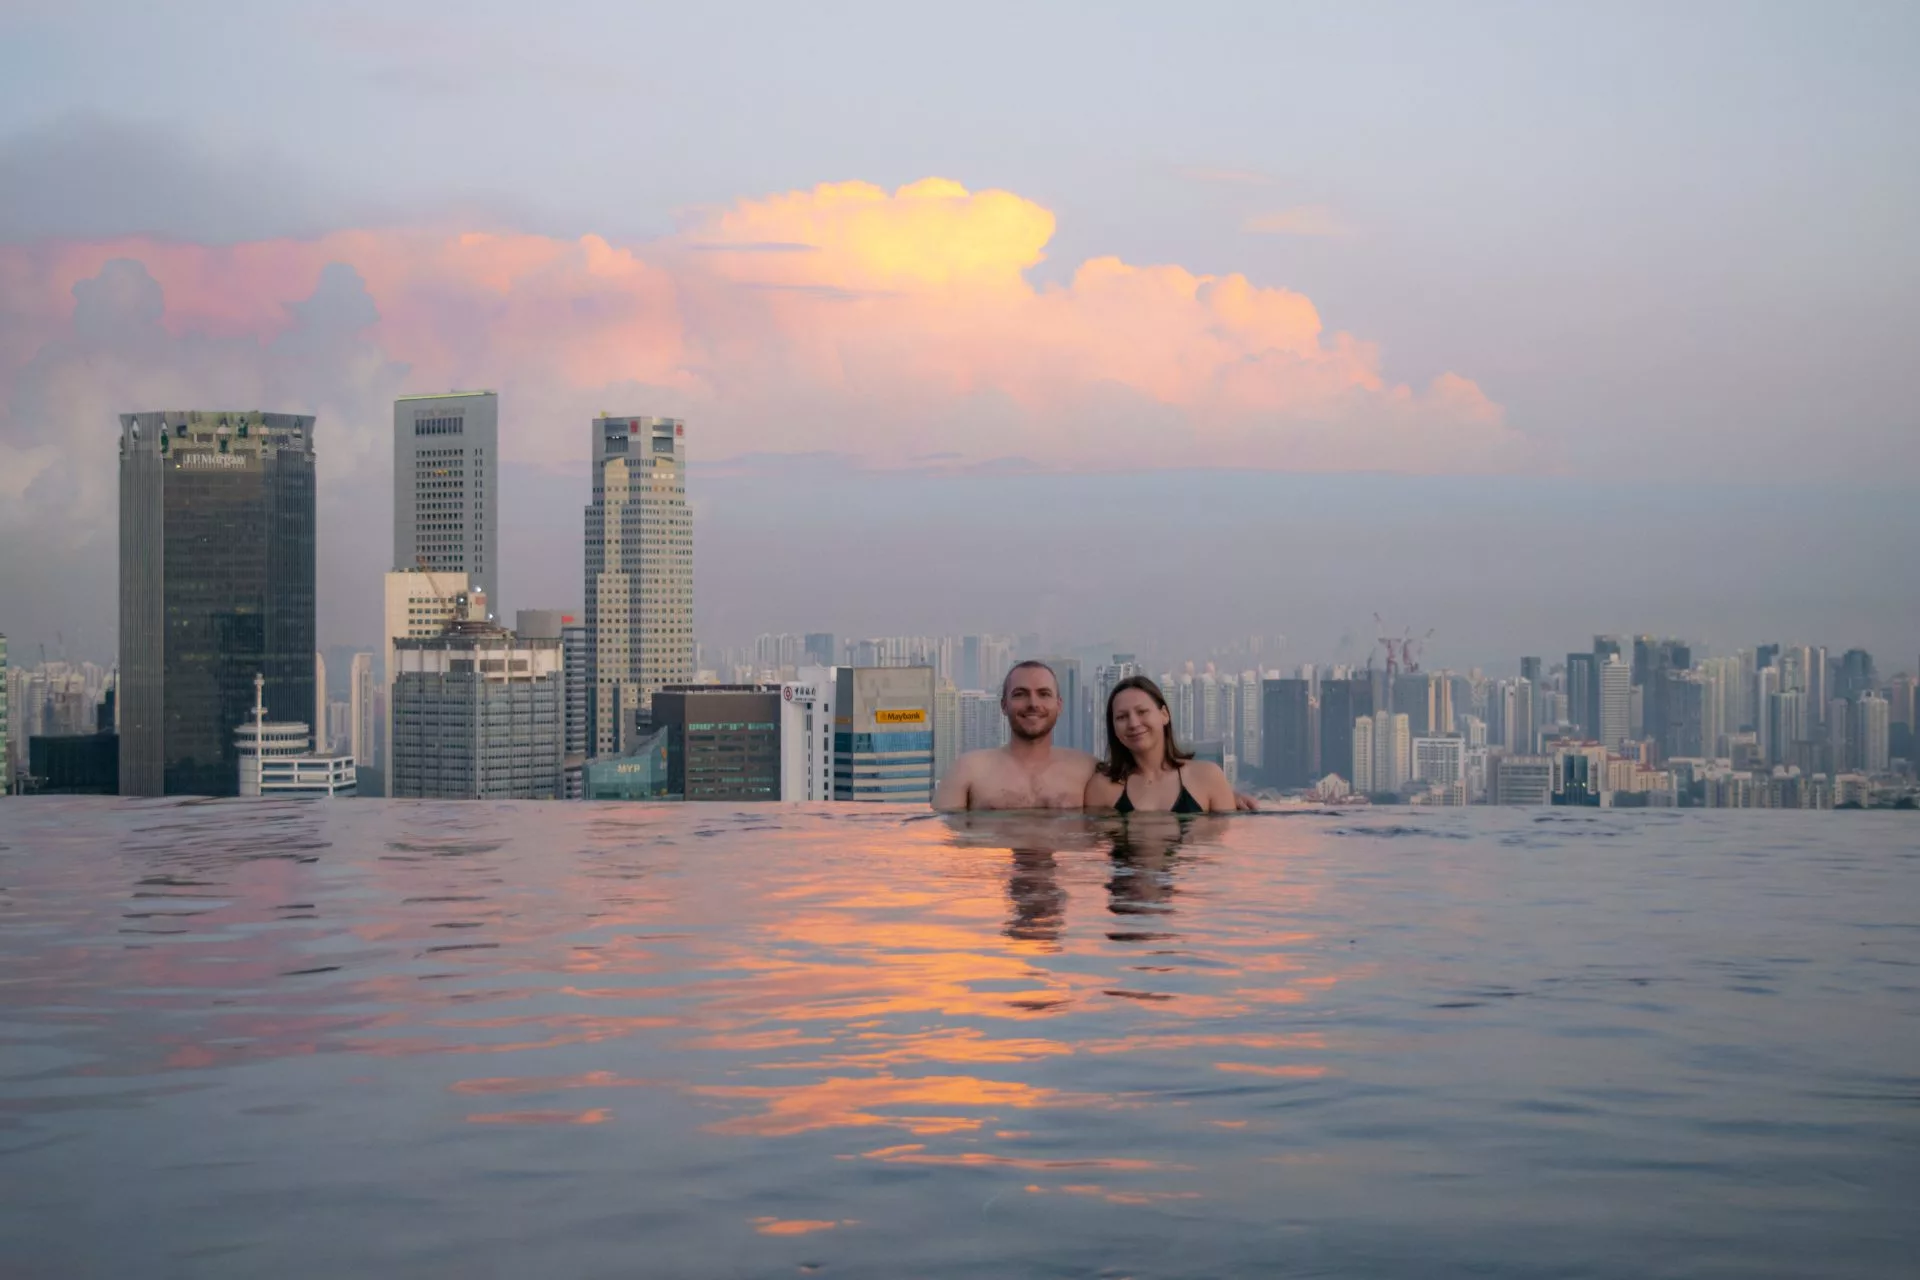 Infinity Pool på Marina Bay Sands - Luksuriøst bad med spektakulær utsikt